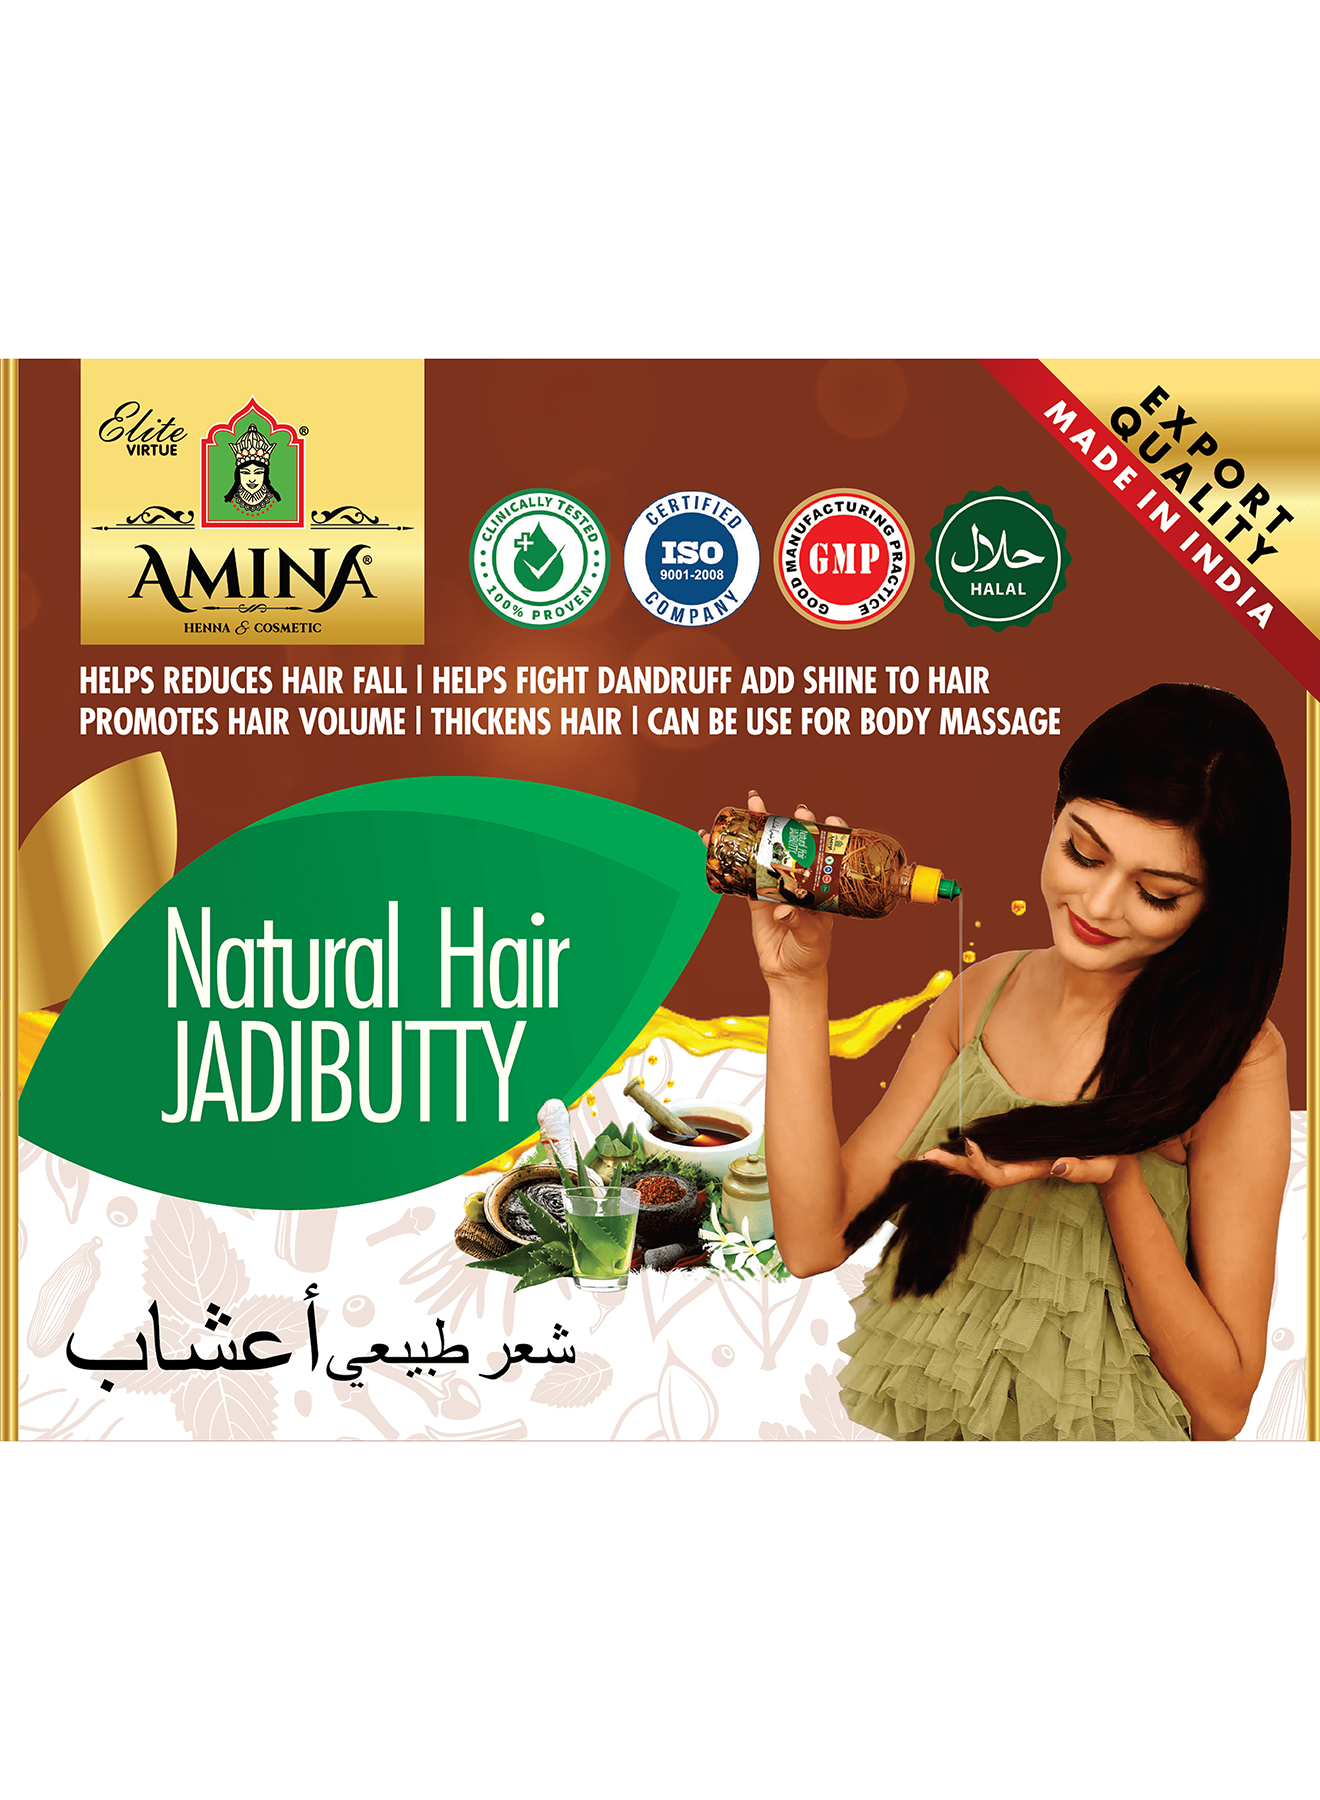 Amina Herbal Jadibuttijadibutty for Hair Fall Dandruff Value Pack of 12 